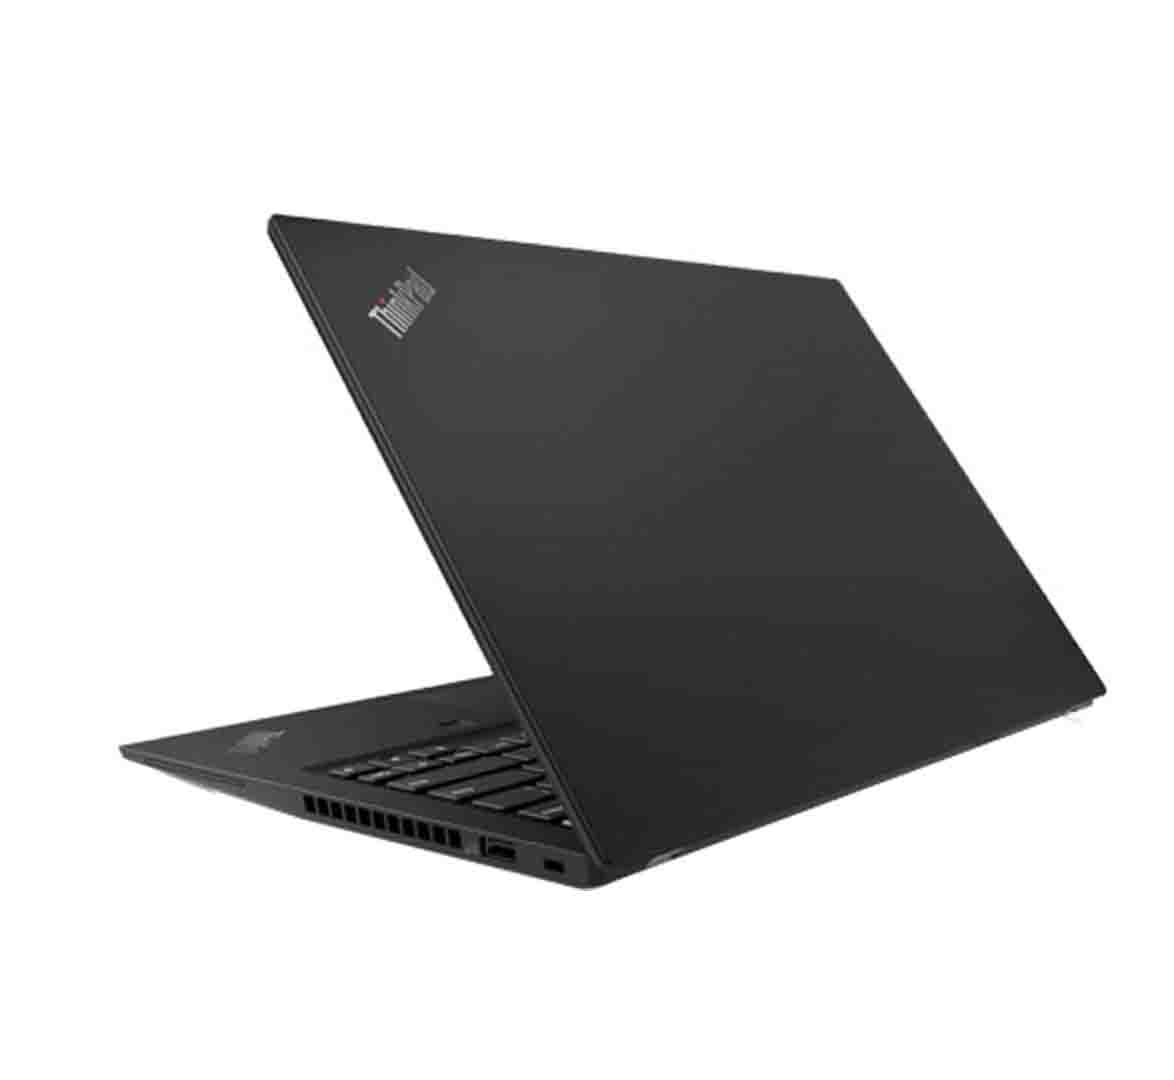 Lenovo ThinkPad T490s Business Laptop, Intel Core i7-8th Generation CPU, 16GB RAM, 512GB SSD, 14 inch Touchscreen, Windows 10 Pro, Refurbished Laptop